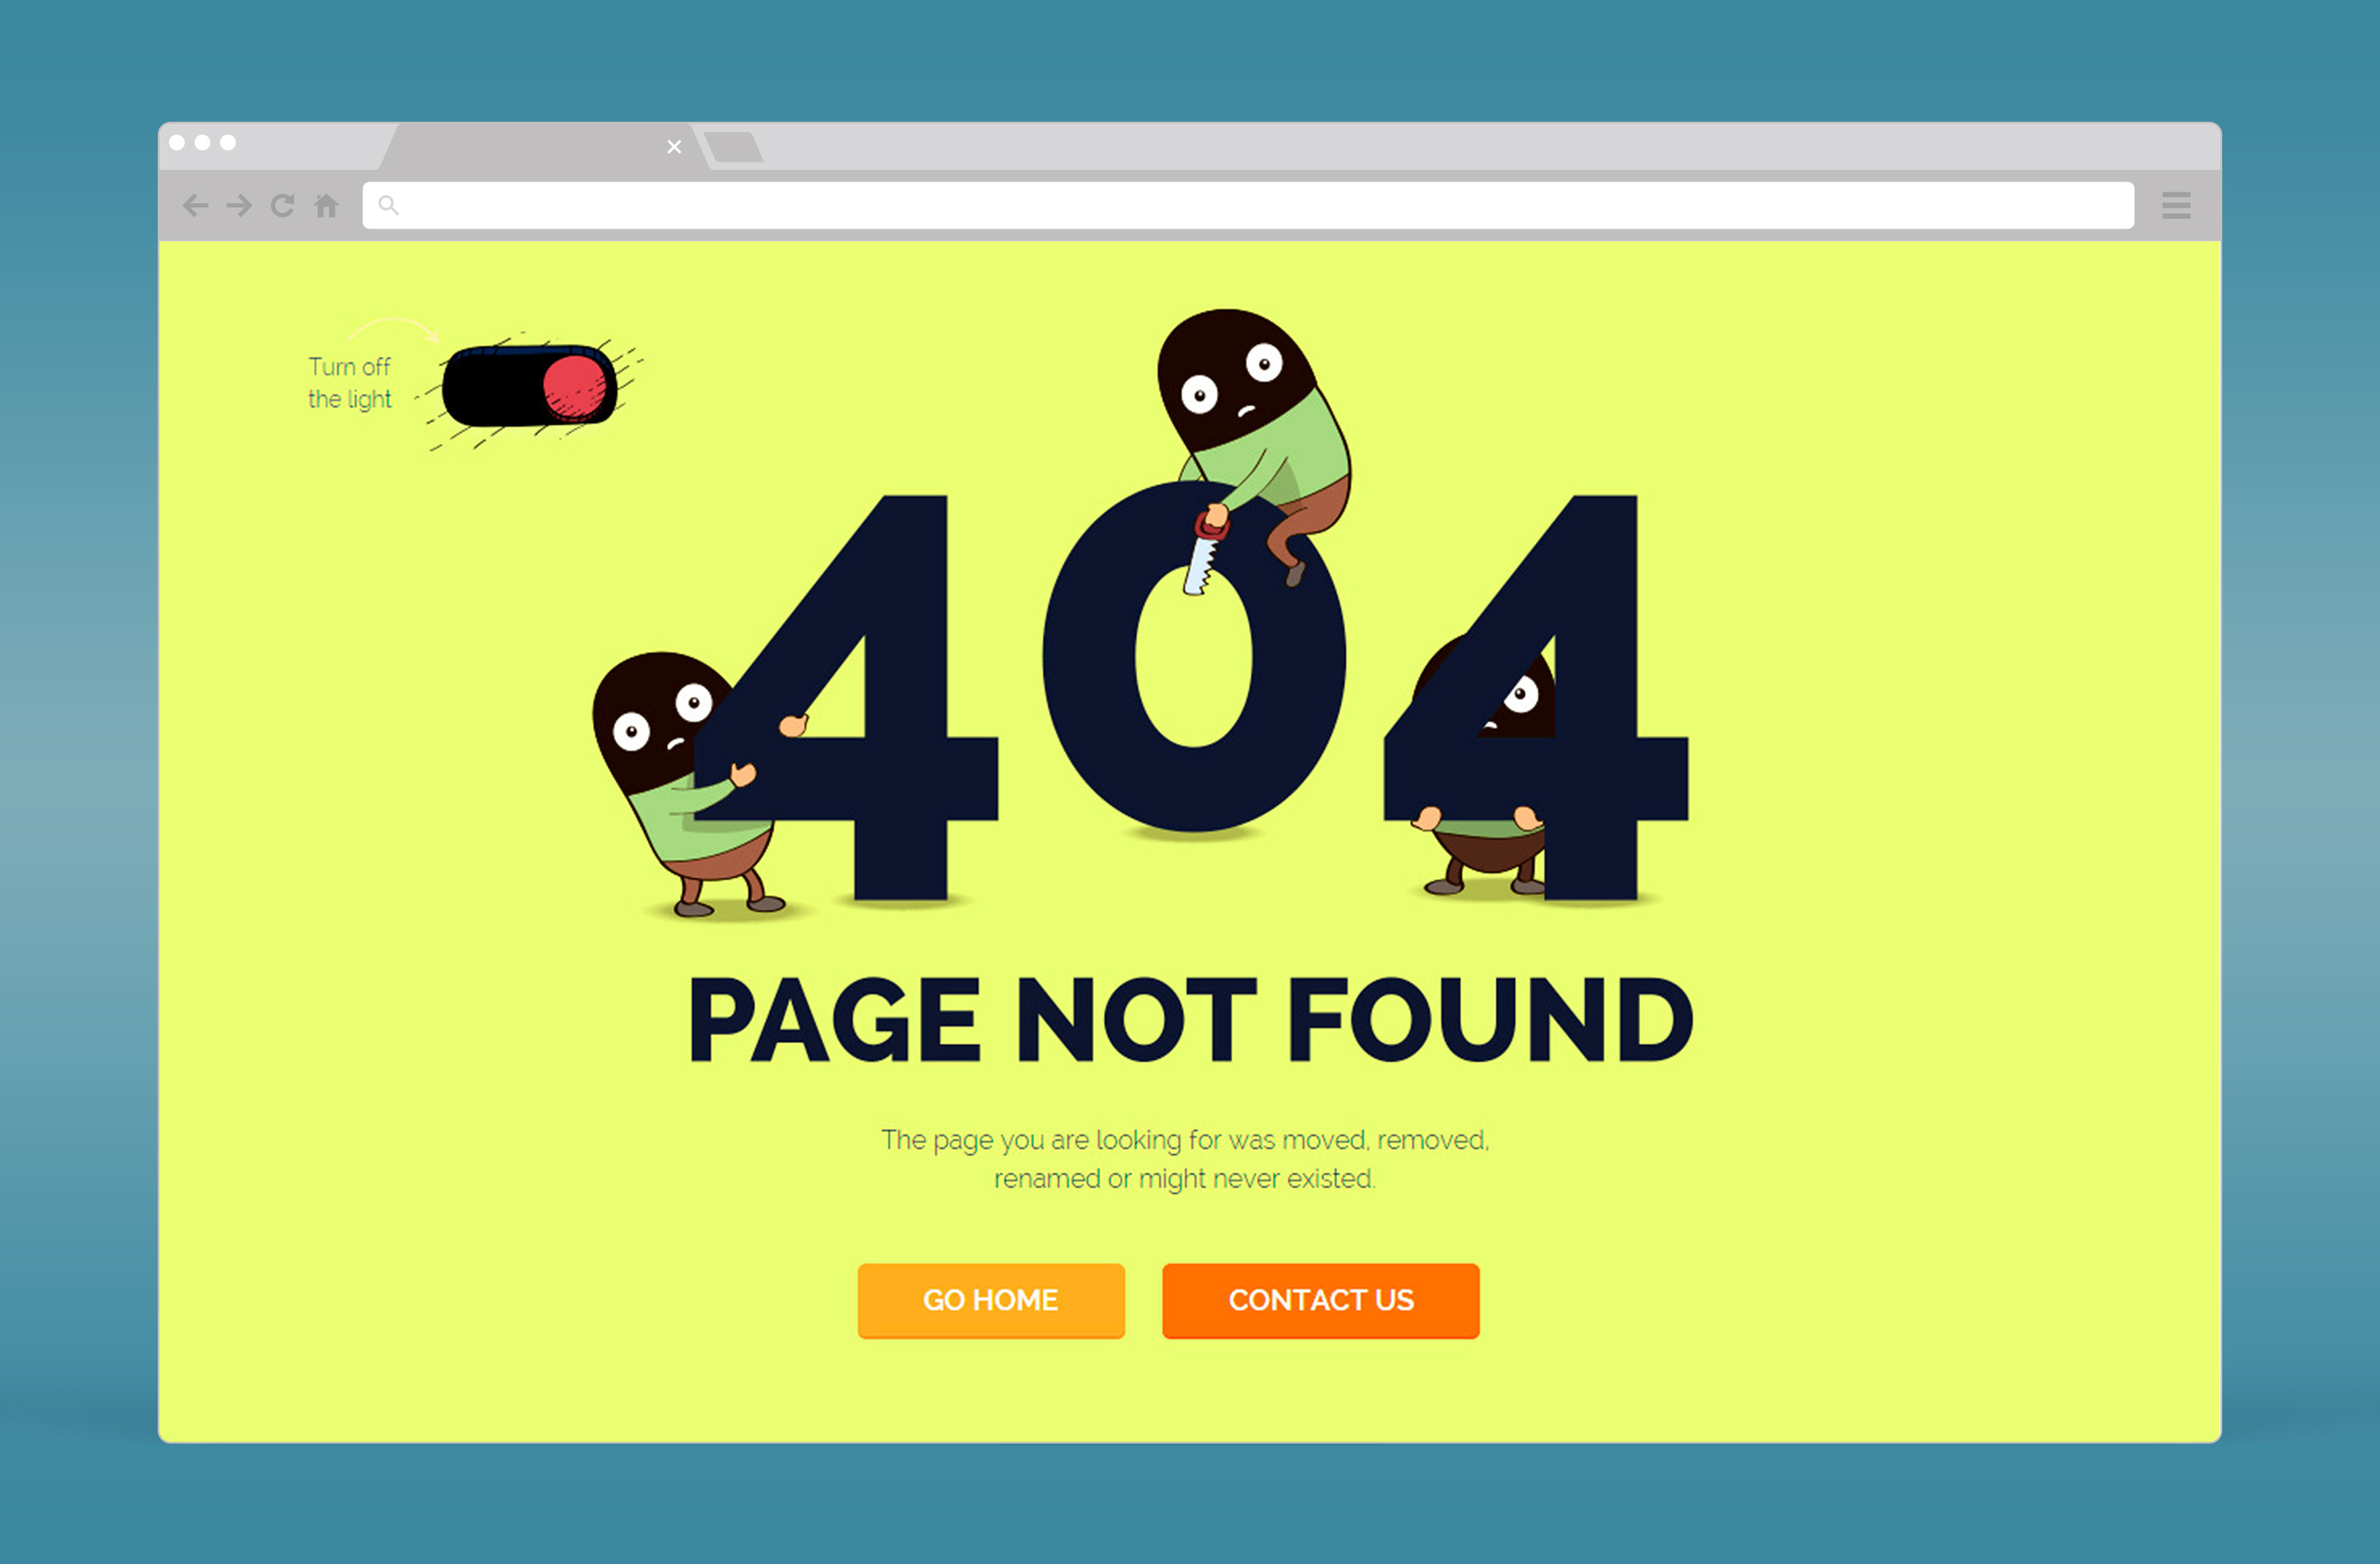 Pagina 404 conform standardelor ecommerce